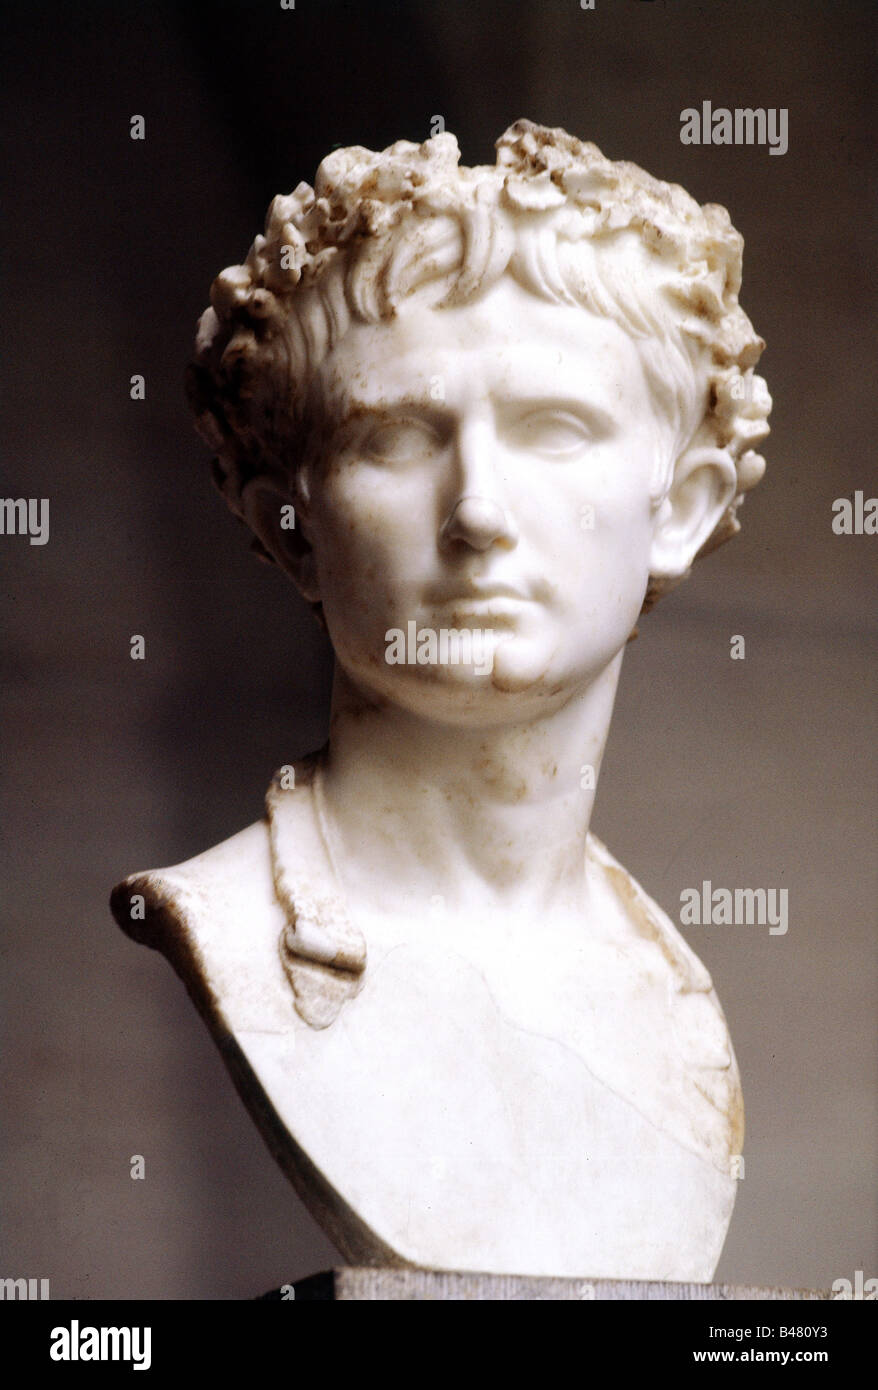 Augustus (Imperator Caesar Augustus), 23.9.63 v. Chr. - 19.8.14 n. Chr., römischer Kaiser 13.1.27 v. Chr. - 19.8.14 n. Chr., Porträt, Büste, Marmor, ca. 20 v. Chr., Glyptothek München, Corona civica oder Corona triumphalis, Stockfoto